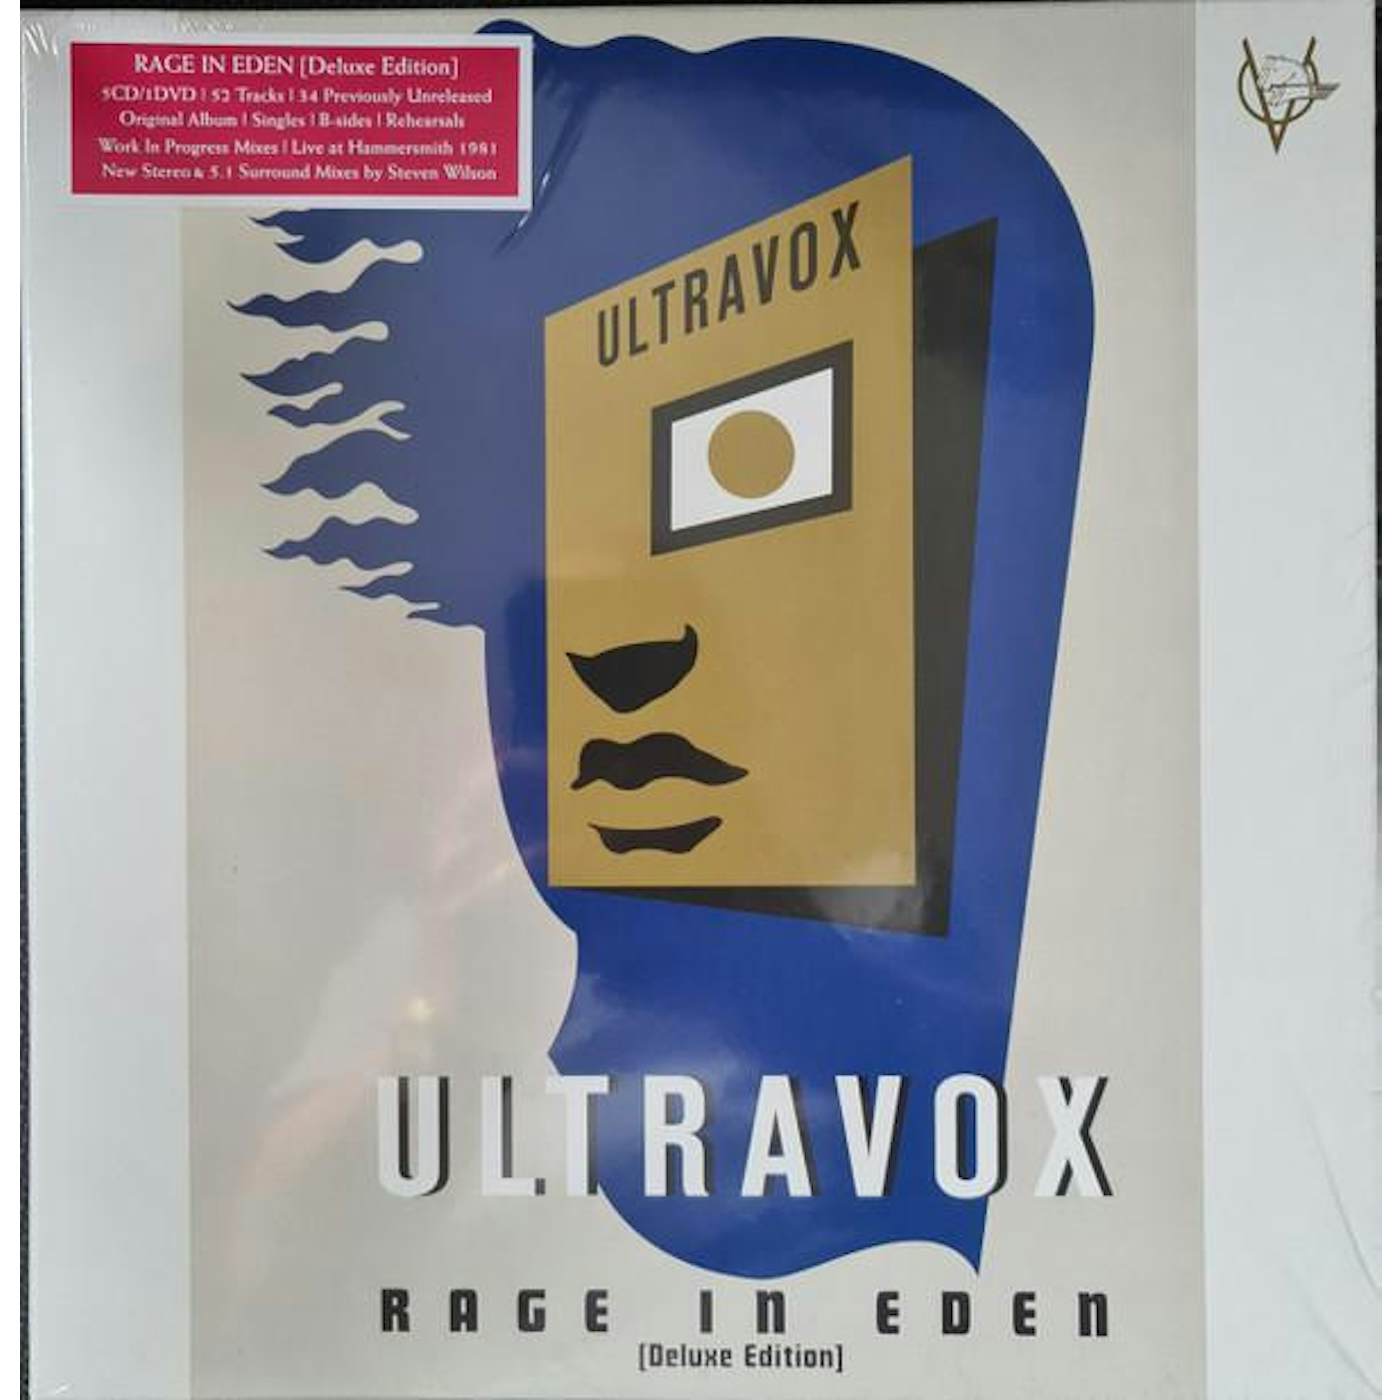 Ultravox RAGE IN EDEN (SUPER DELUXE EDITION) CD